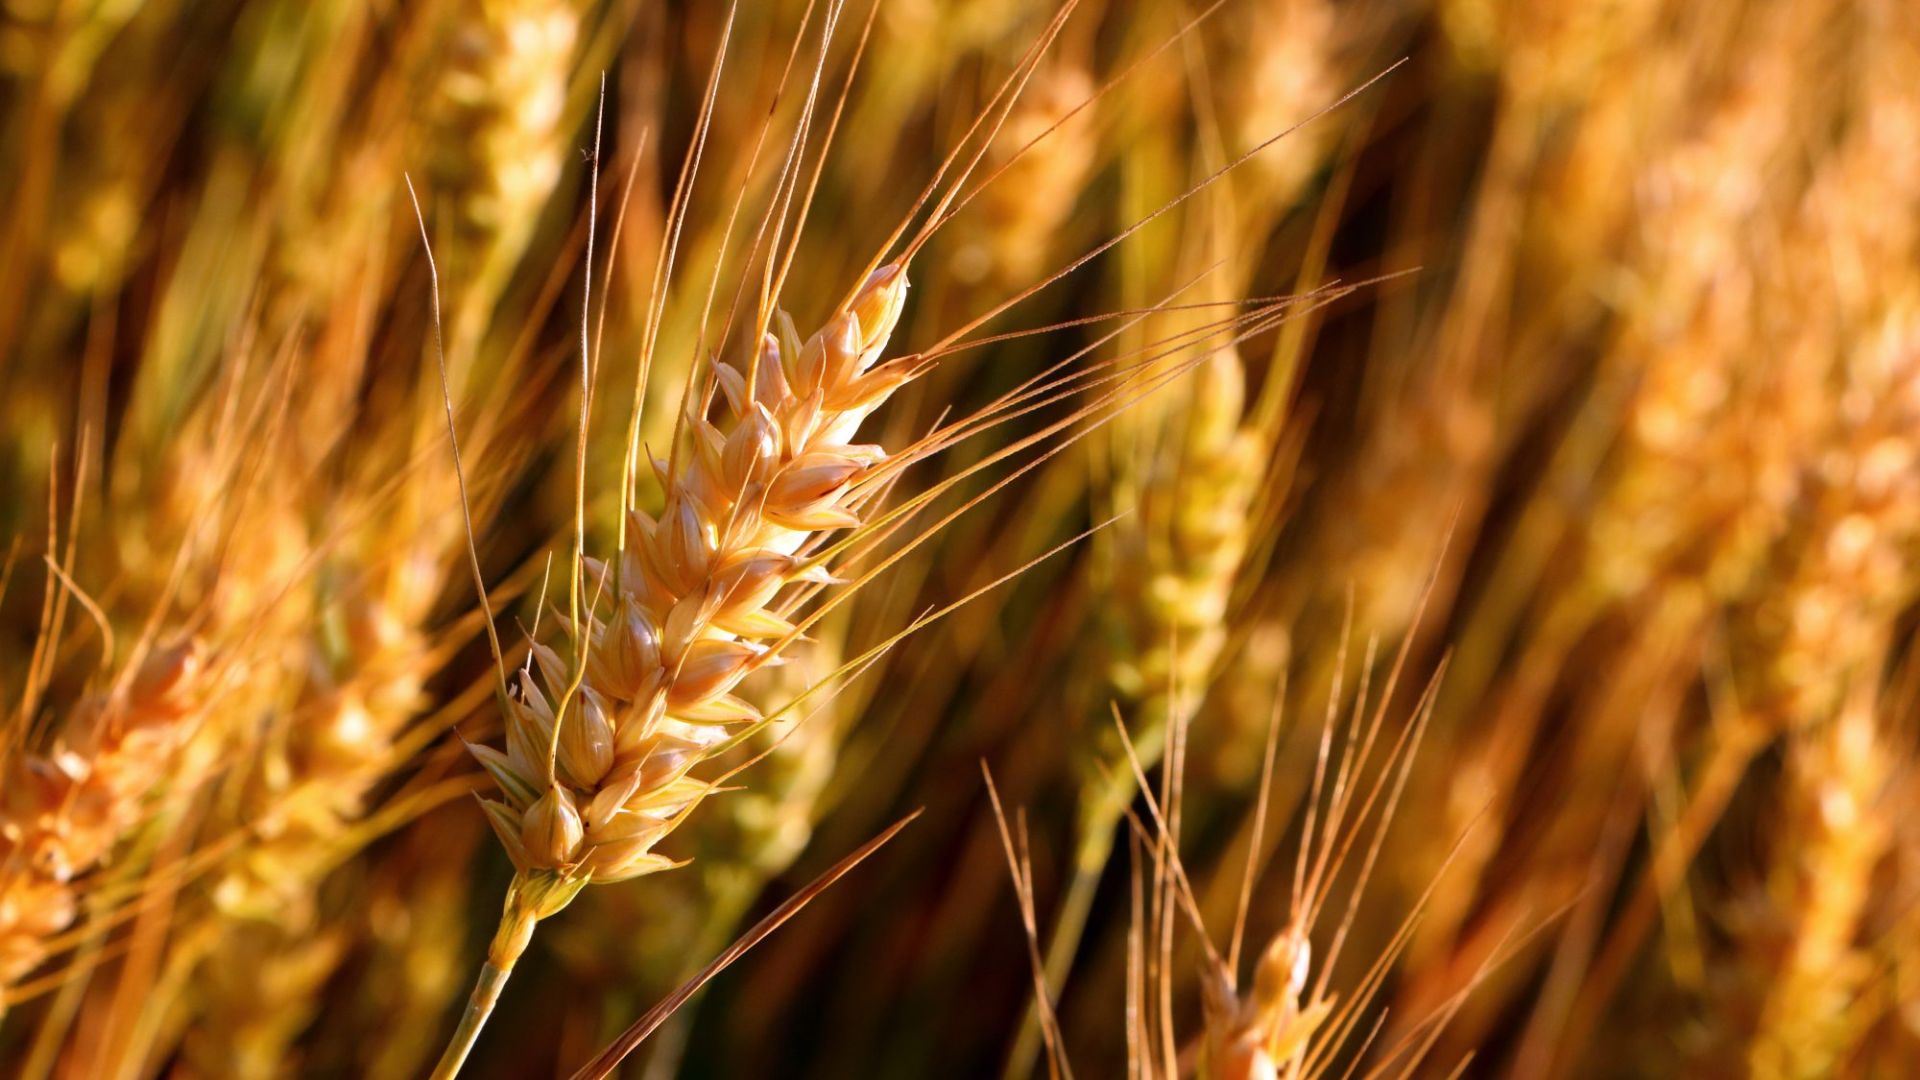 Azerbaijan grows 100k tons of food wheat through circular irrigation systems